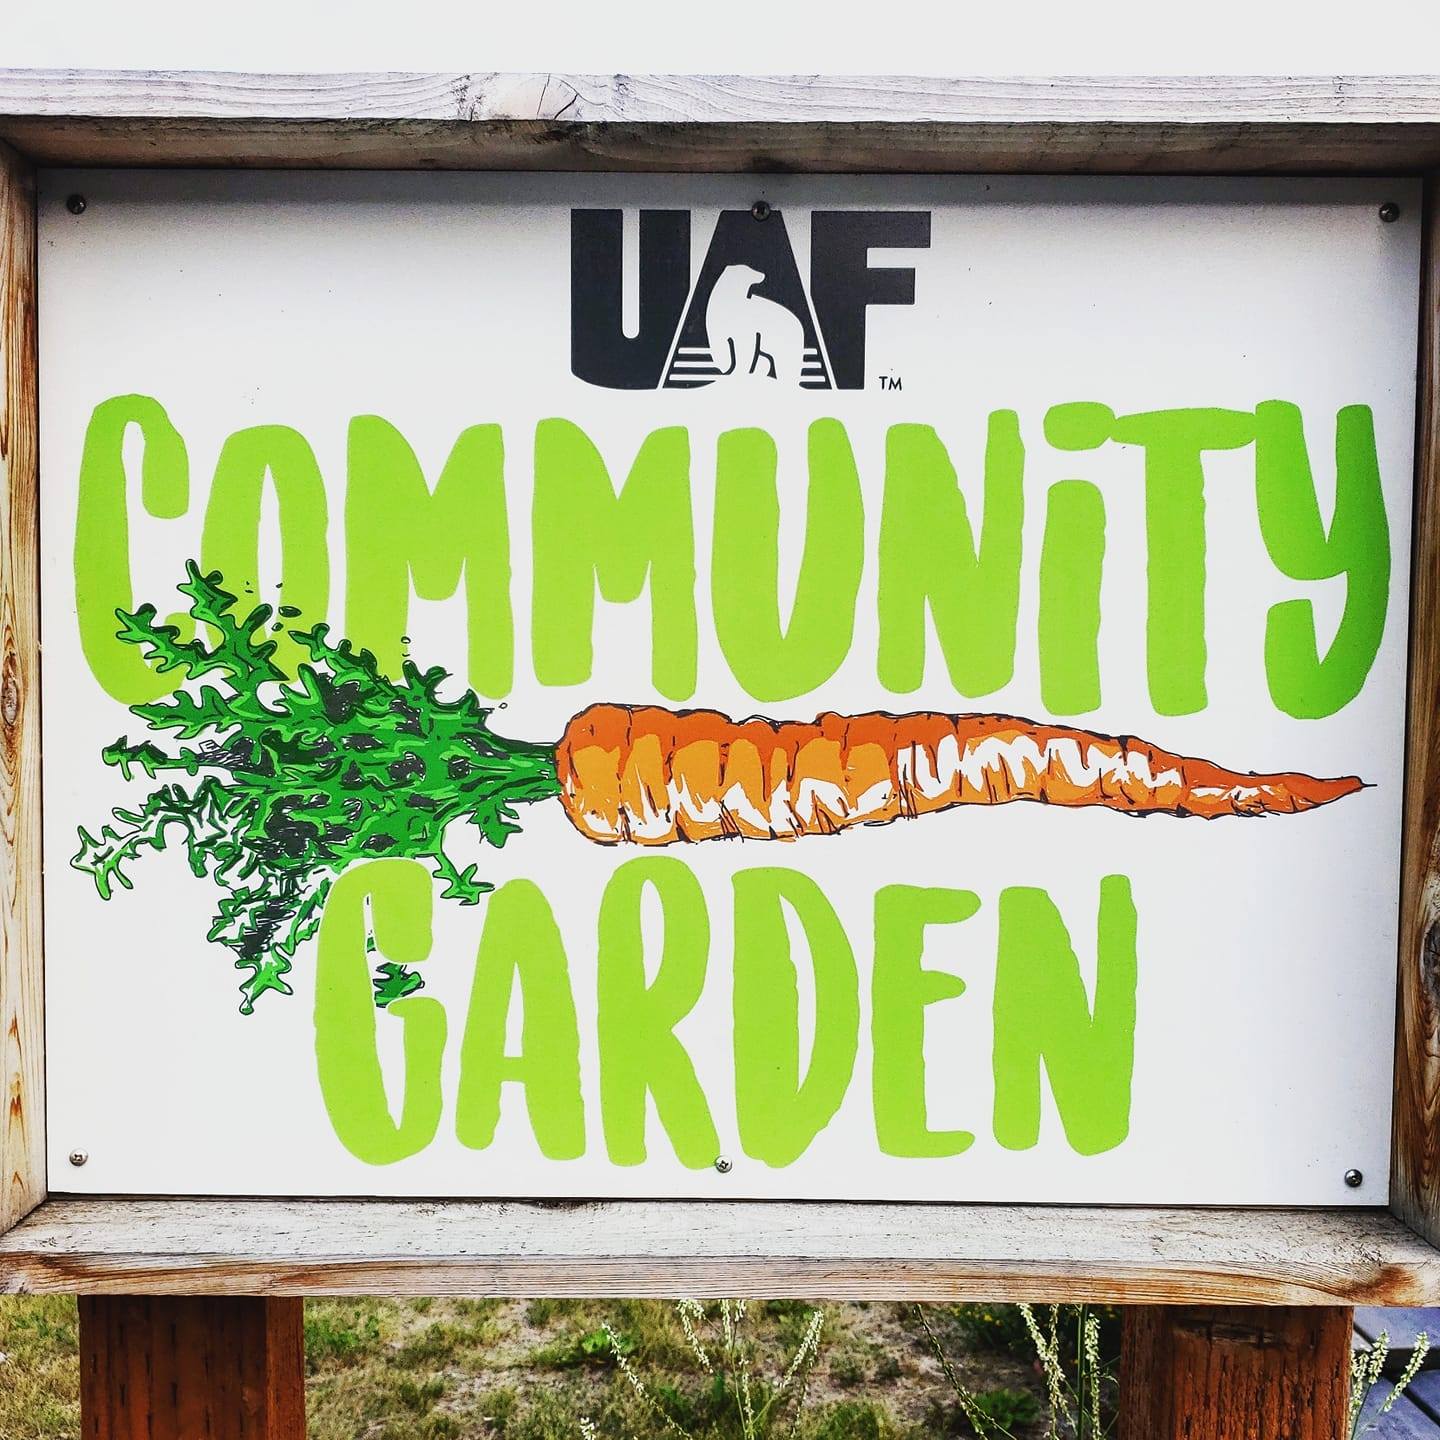 Photo of the UAF community garden sign.